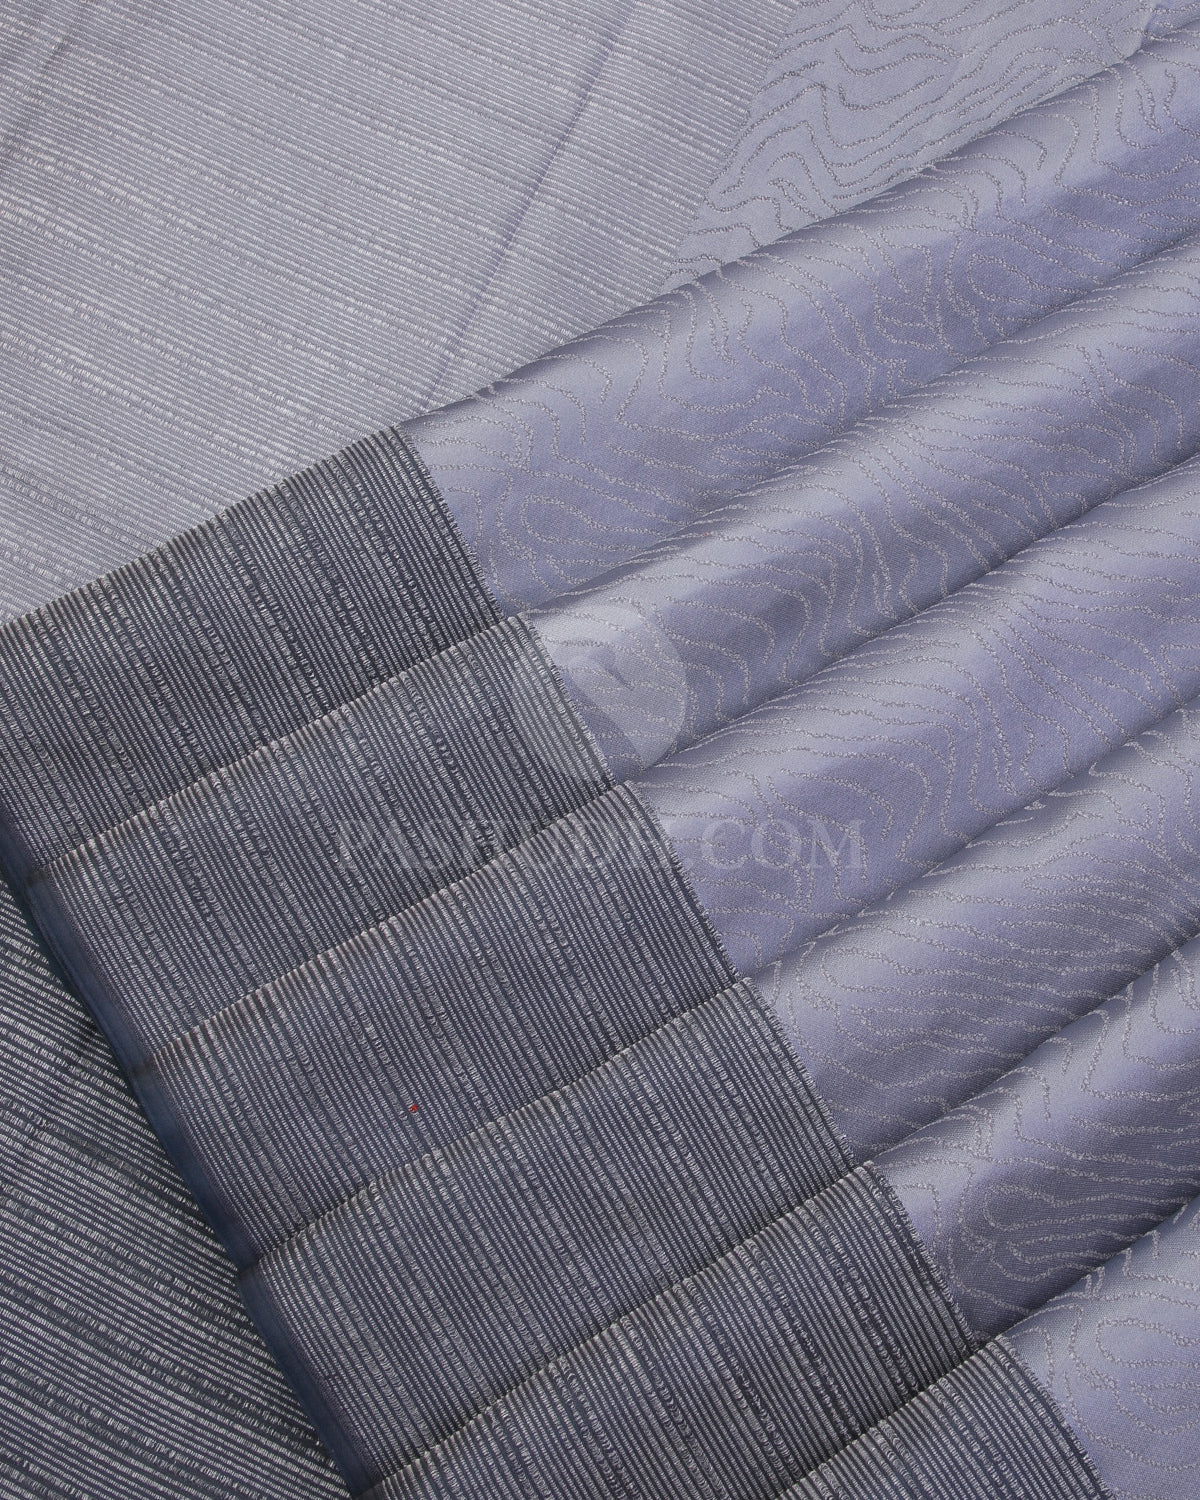 Silver Grey & Dark Grey Kanjivaram Silk Saree - D507(A) - View 3